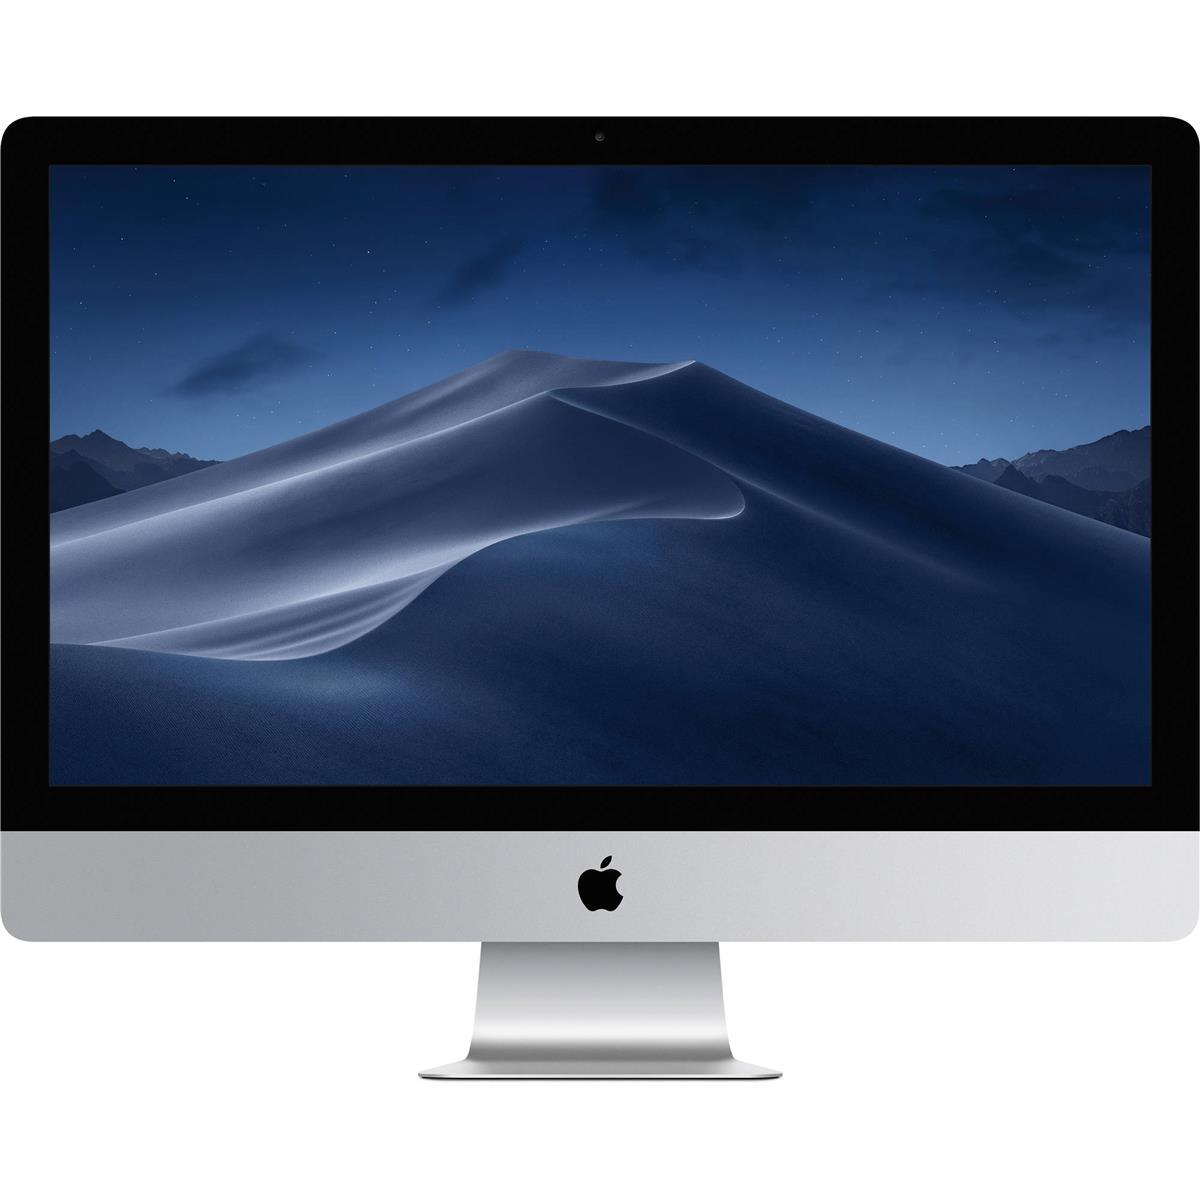 2017 27″ iMac 4.2GHz quad-core Intel Core i7 with Retina 5K display